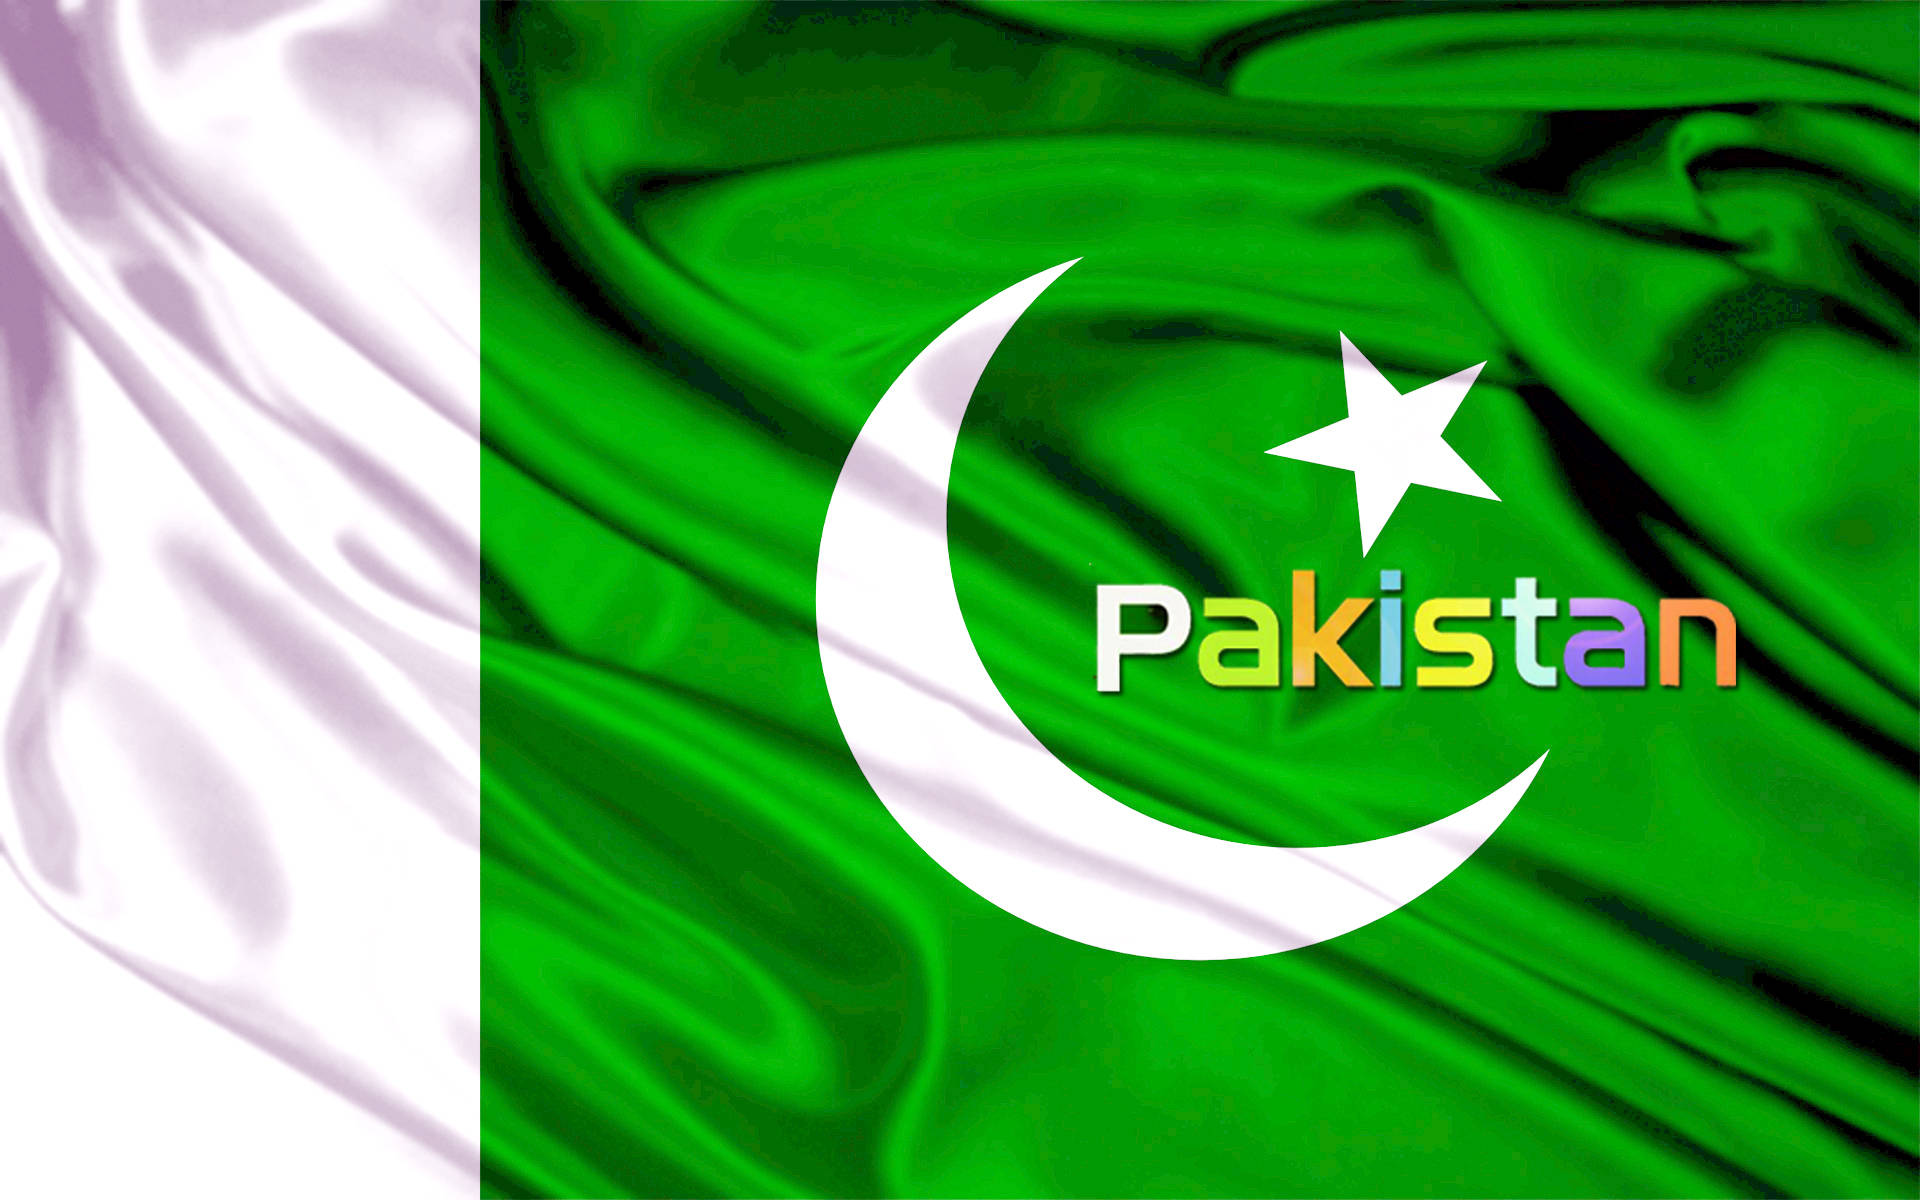 100+] Pakistan Flag Wallpapers | Wallpapers.com